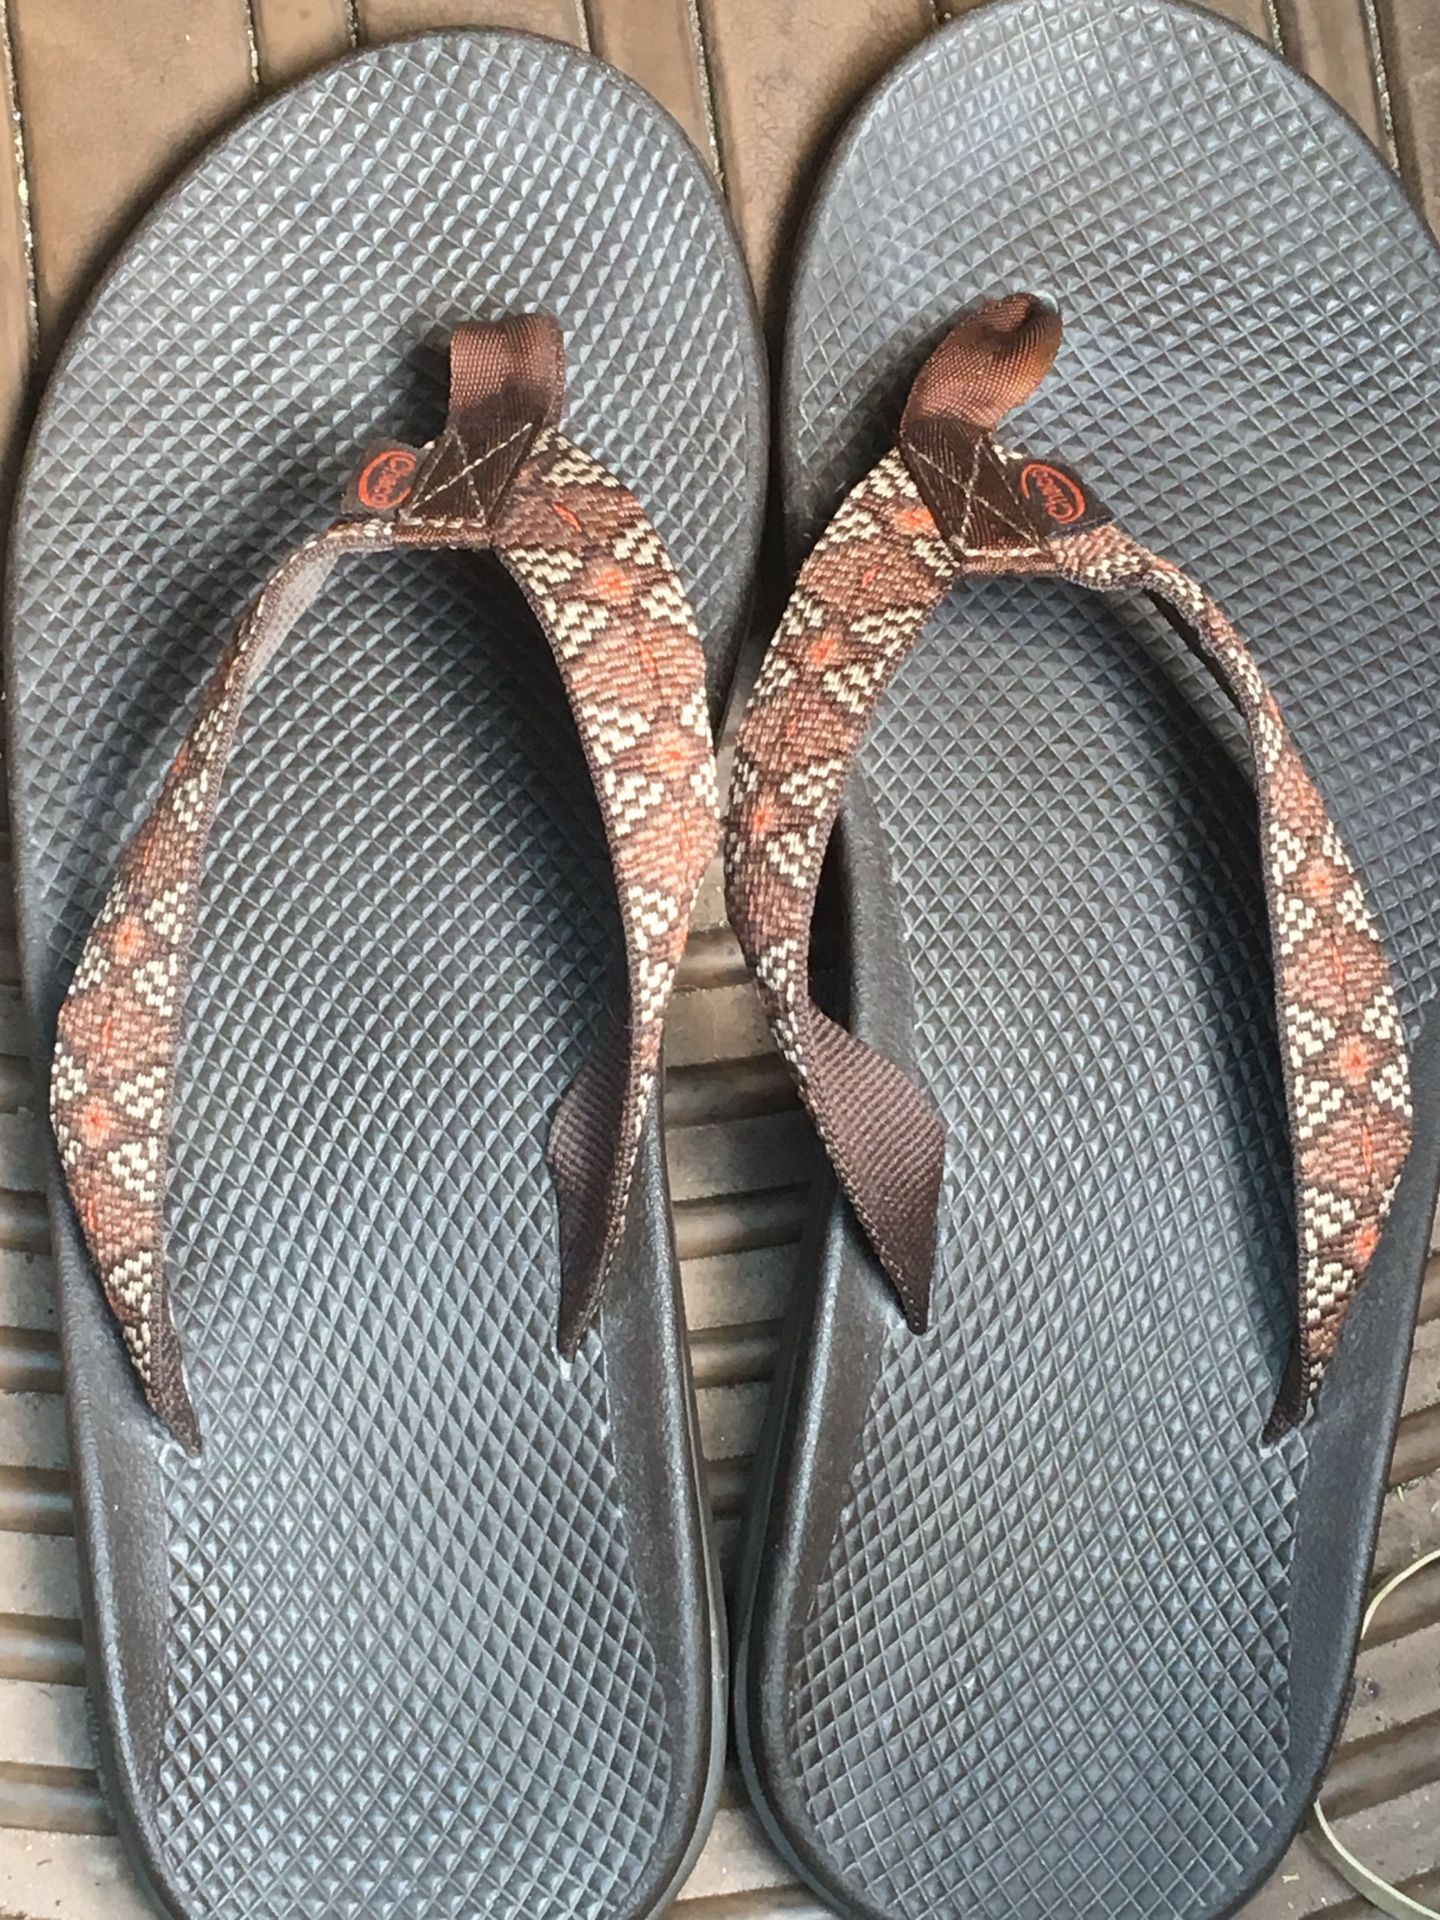 Men’s Chaco sandals size 10